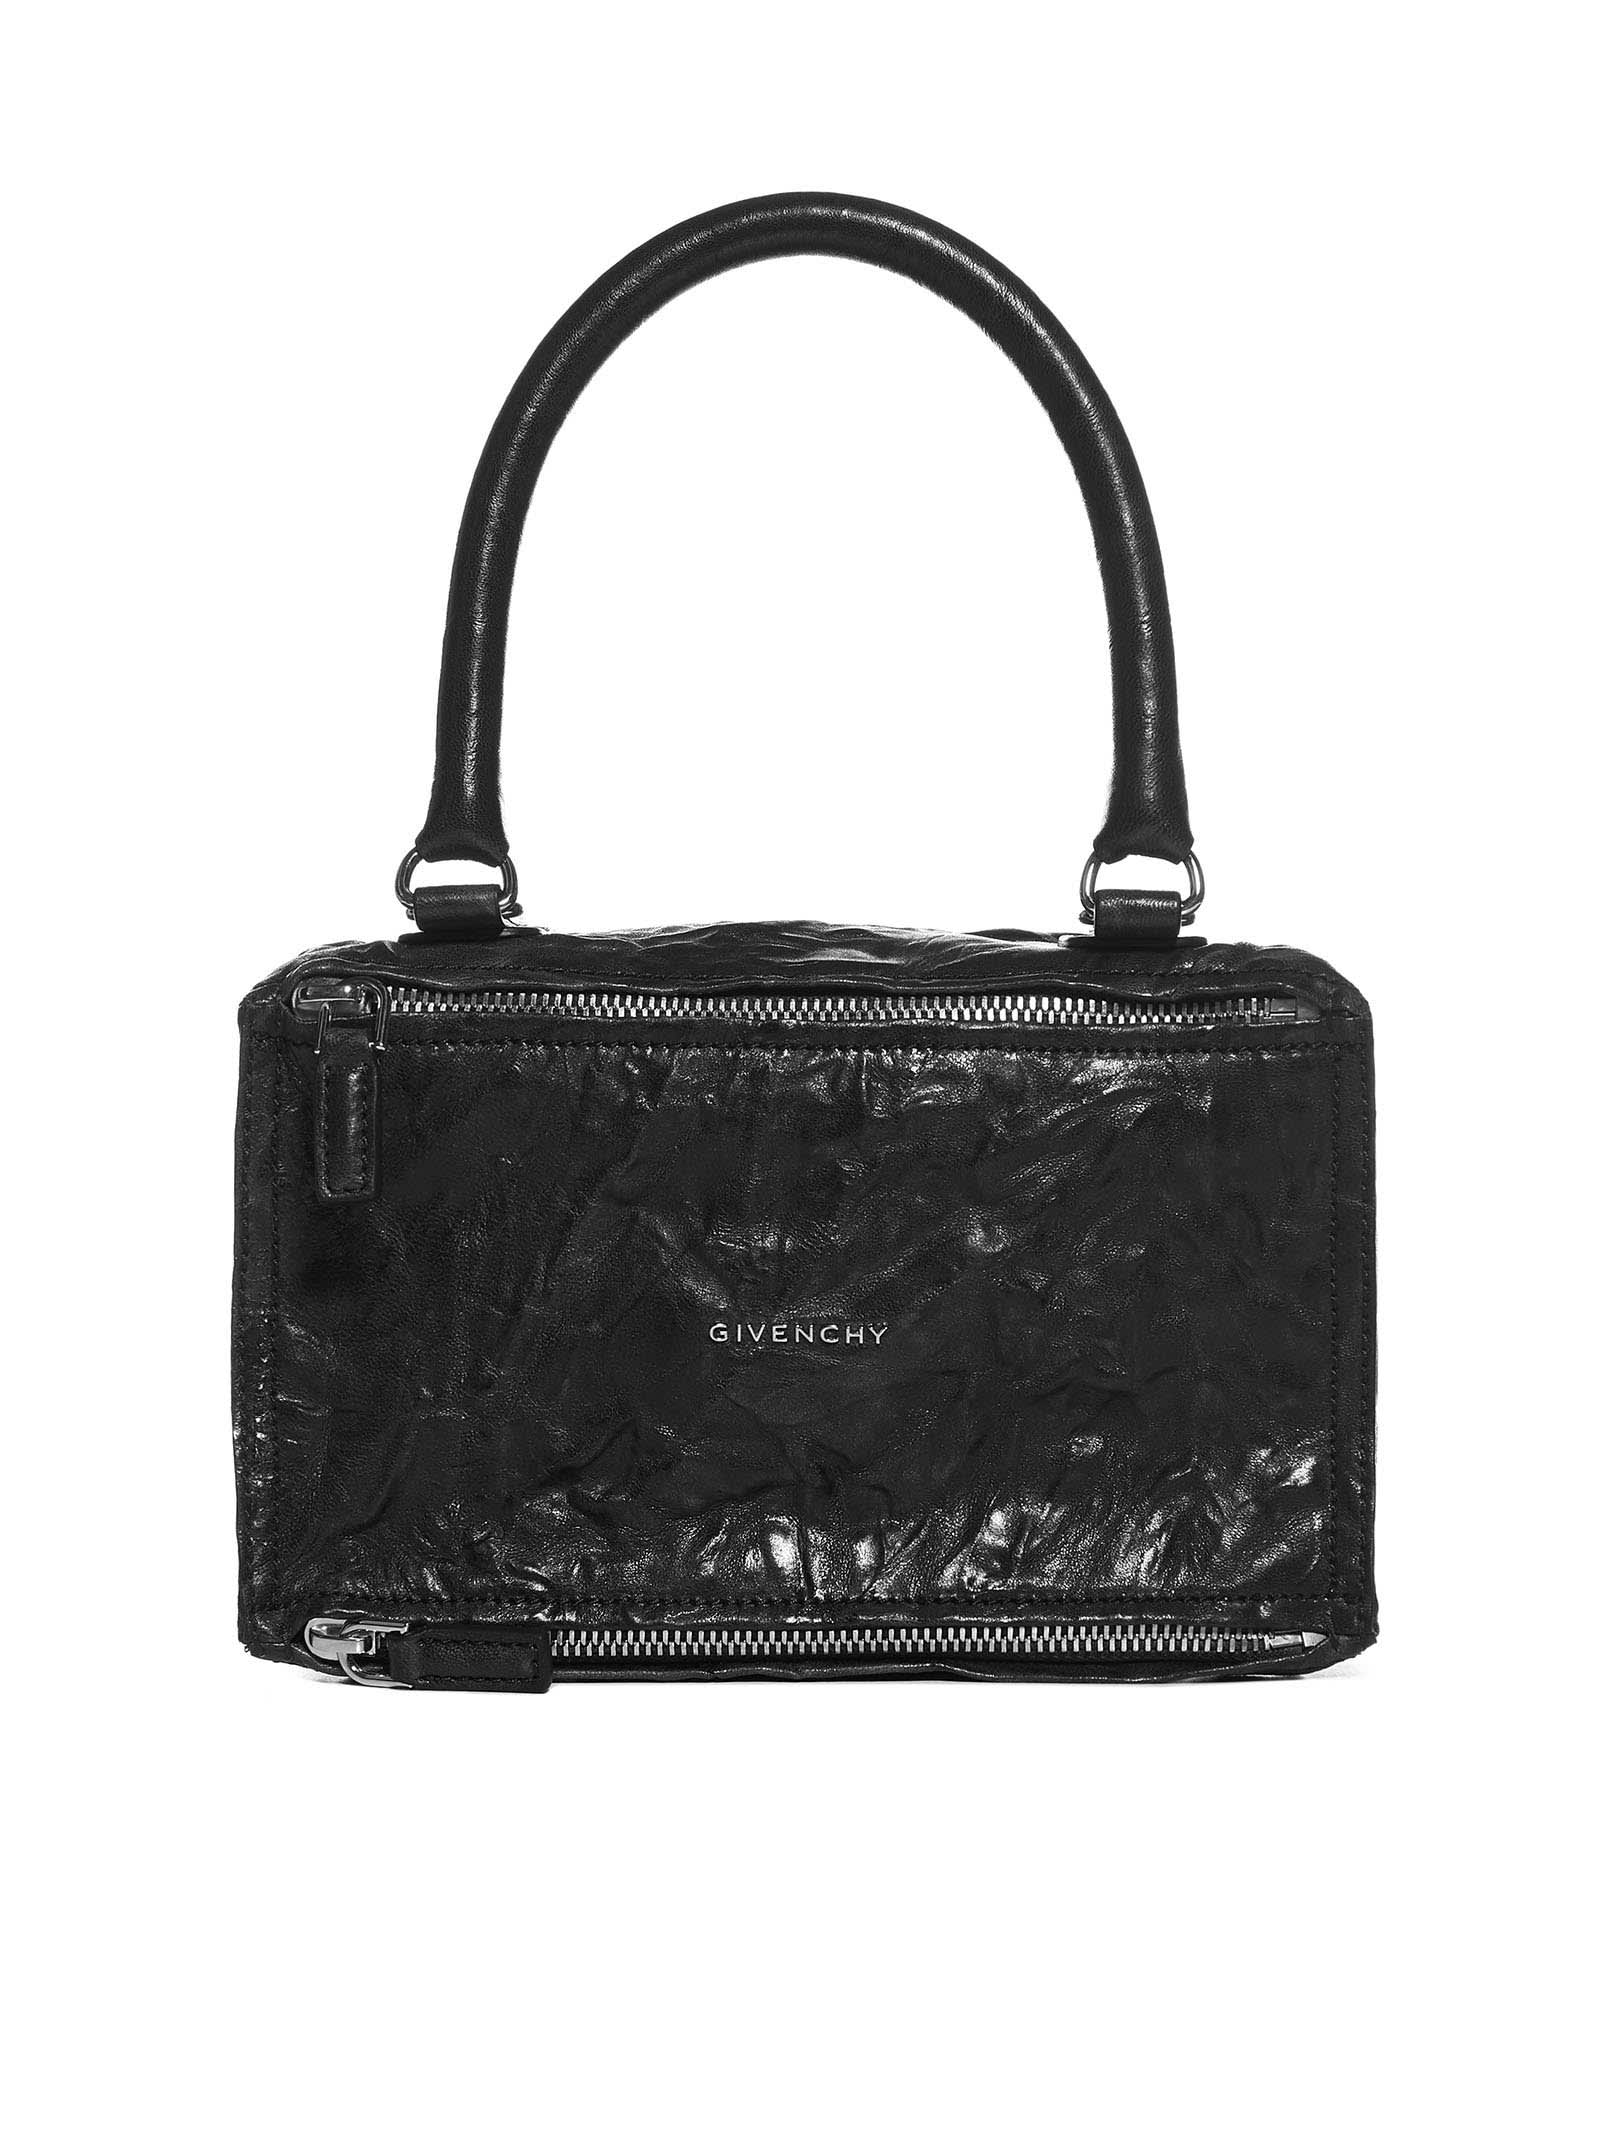 Givenchy Pandora Wrinkled Leather Small Bag